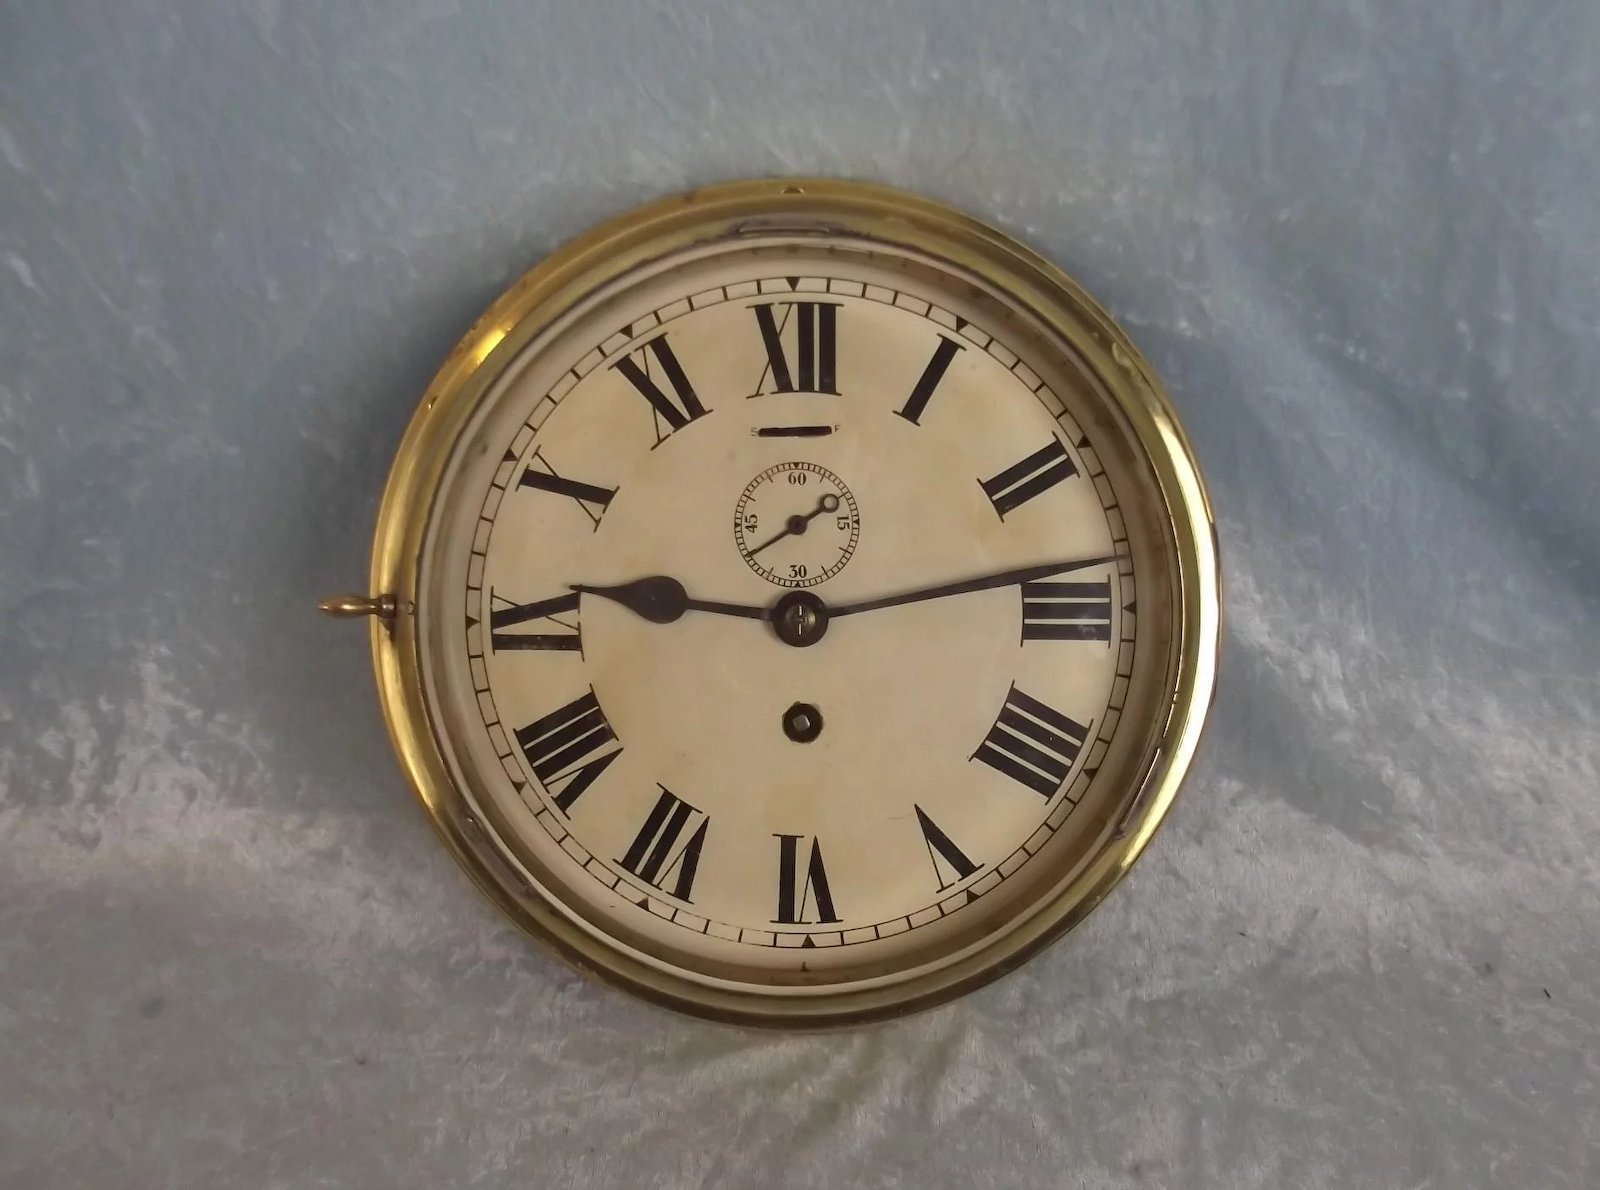 c1930's Smith 8 Day Ships Clock